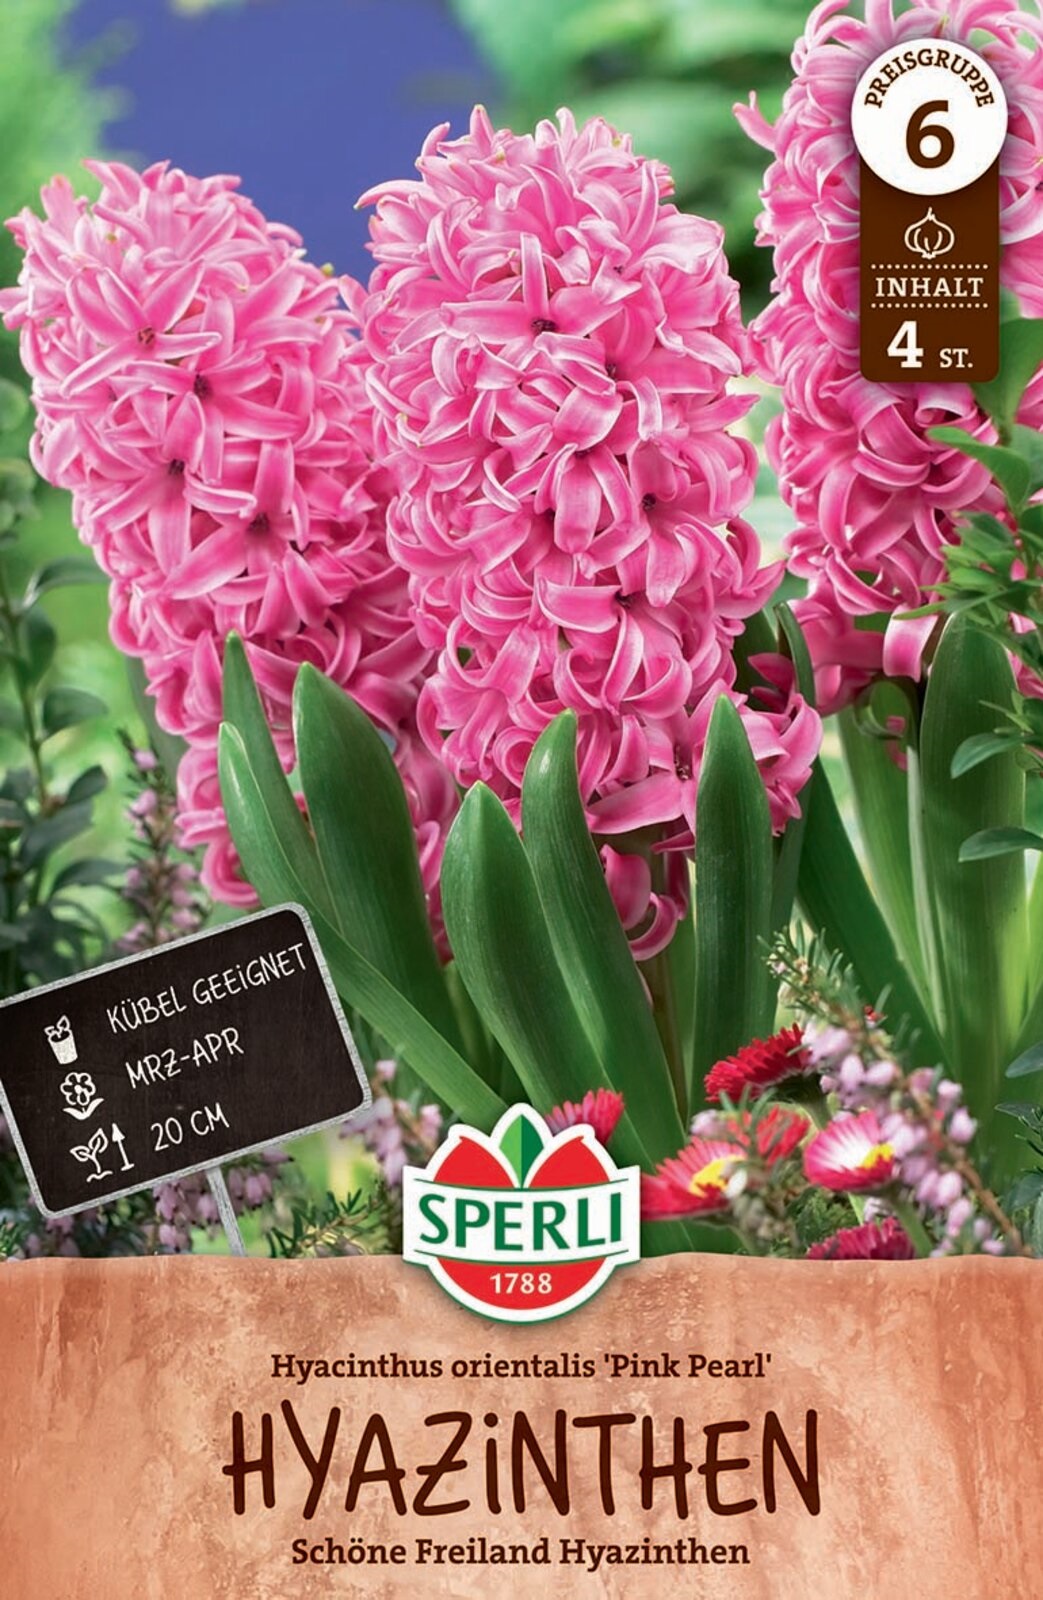 Blumenzwiebel Hyazinthe Rosa Perle 4 Stück Sperli